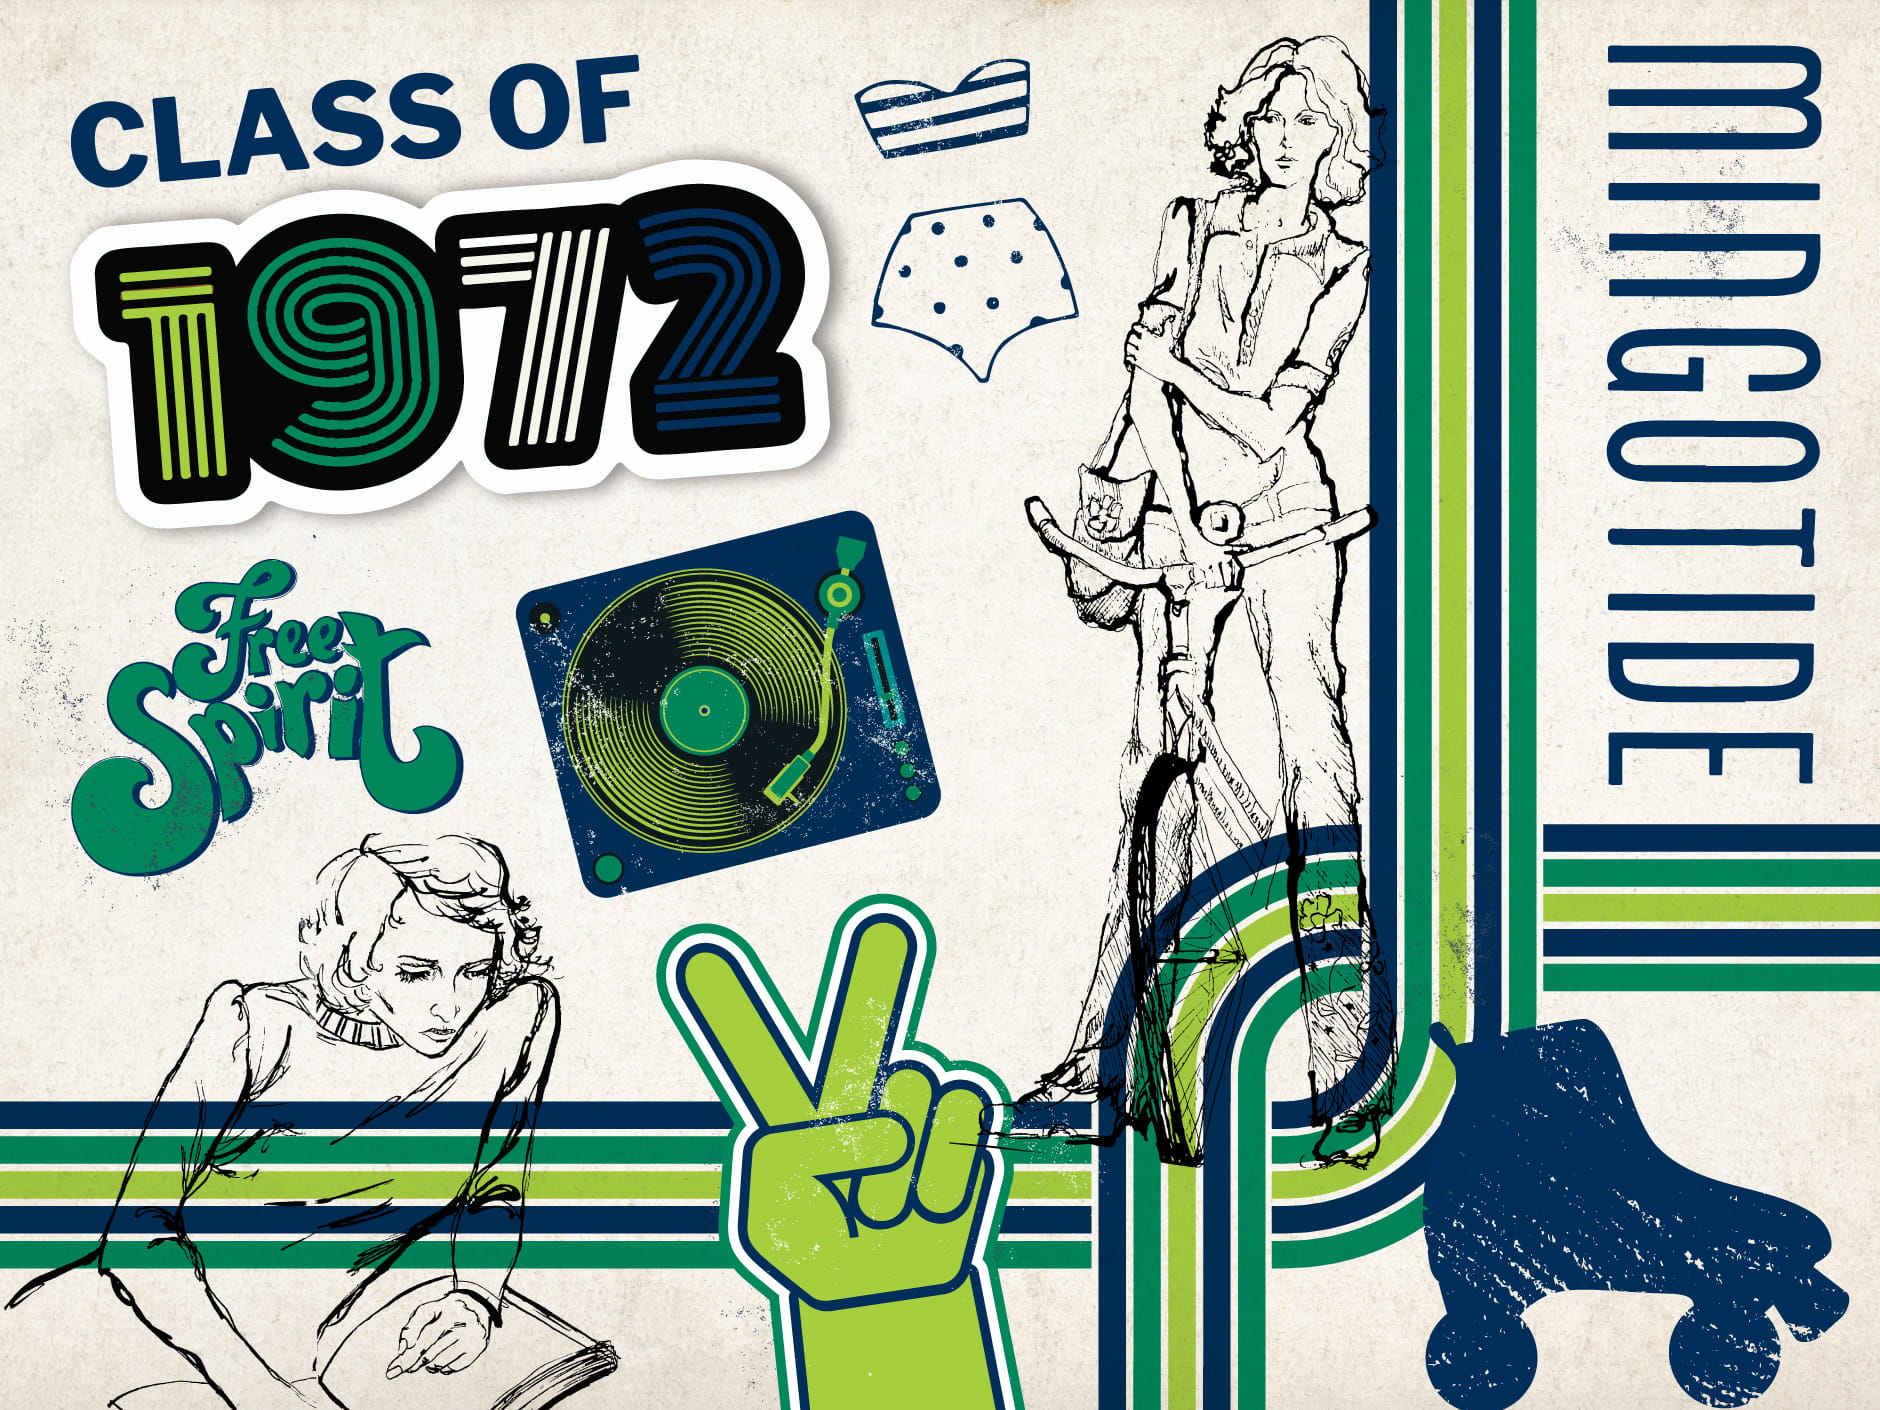 Class of 1972 